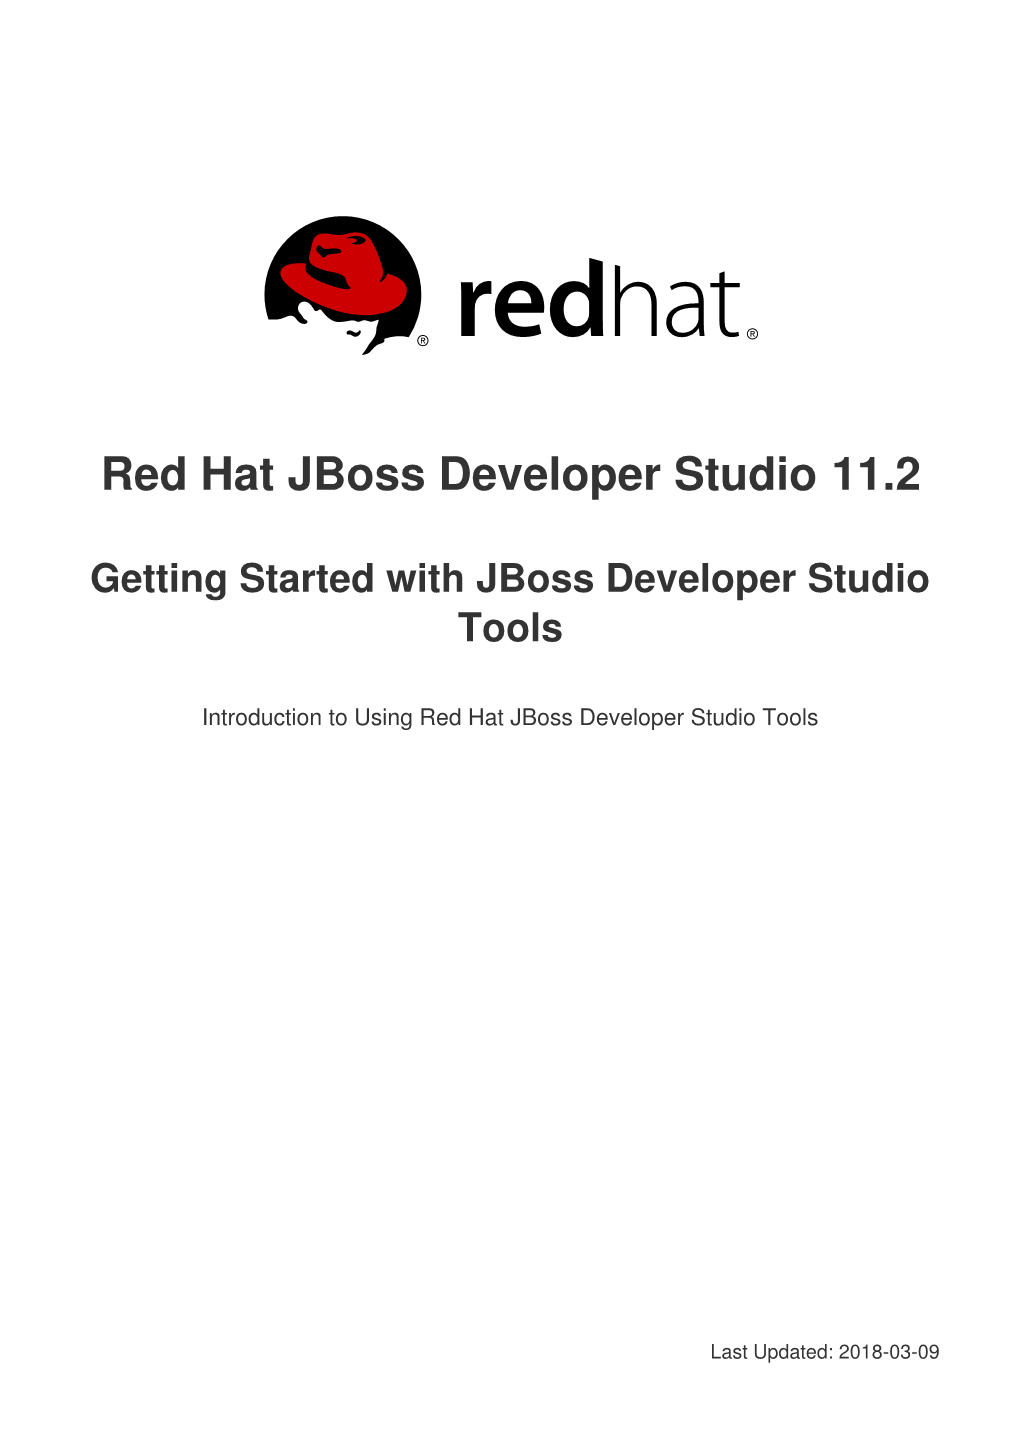 Red Hat Jboss Developer Studio 11.2 Getting Started with Jboss Developer Studio Tools